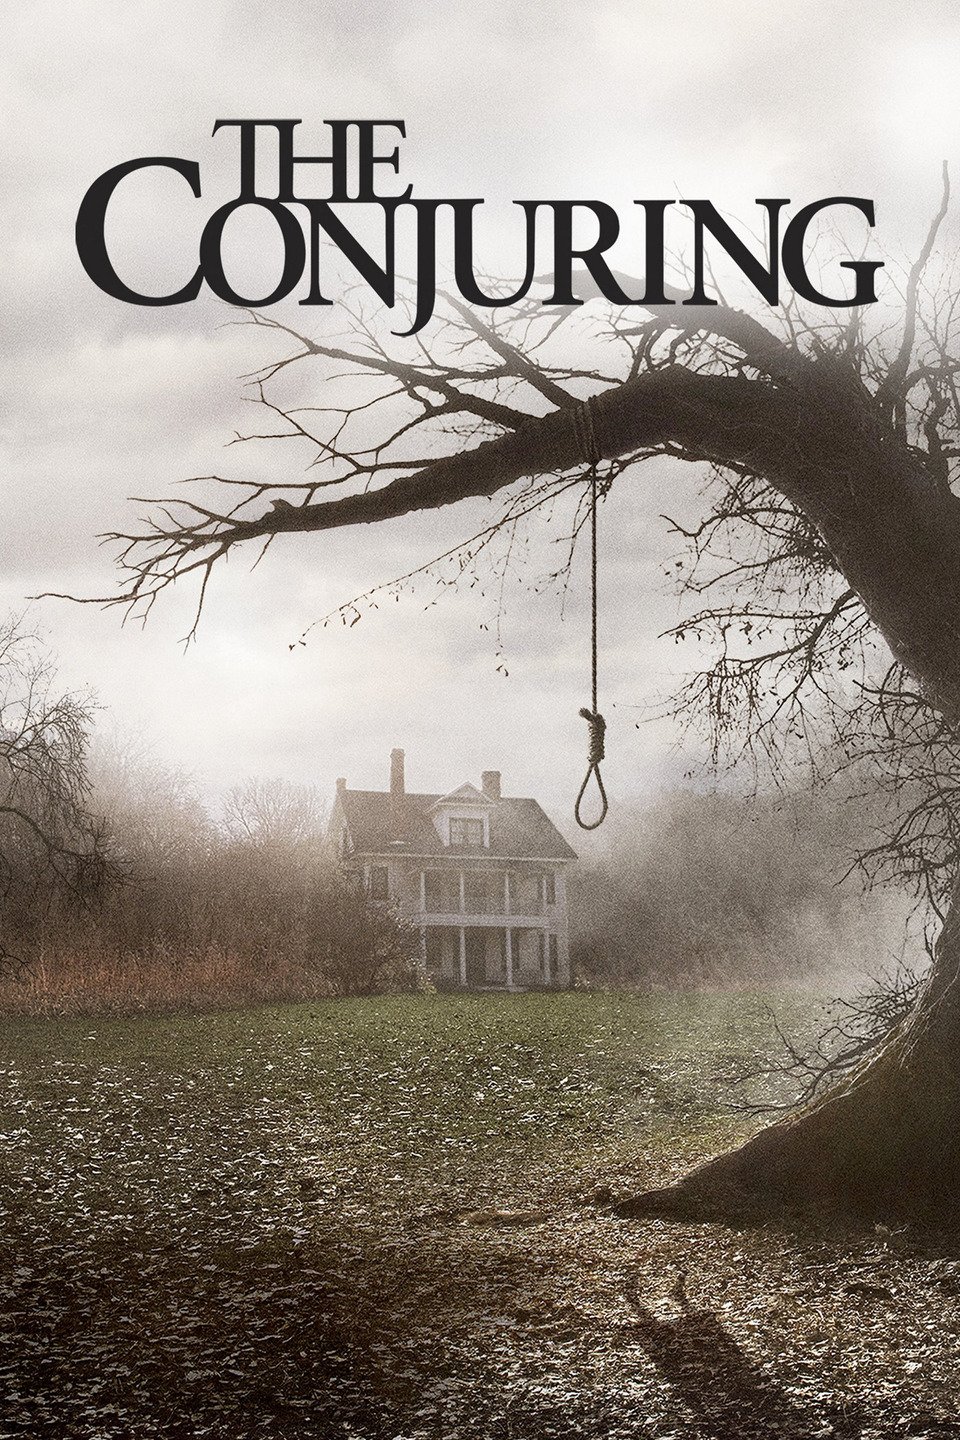 [MINI-HD] The Conjuring (2013) คนเรียกผี [1080p] [พากย์ไทย 5.1 + อังกฤษ DTS] [บรรยายไทย + อังกฤษ] [เสียงไทย + ซับไทย]